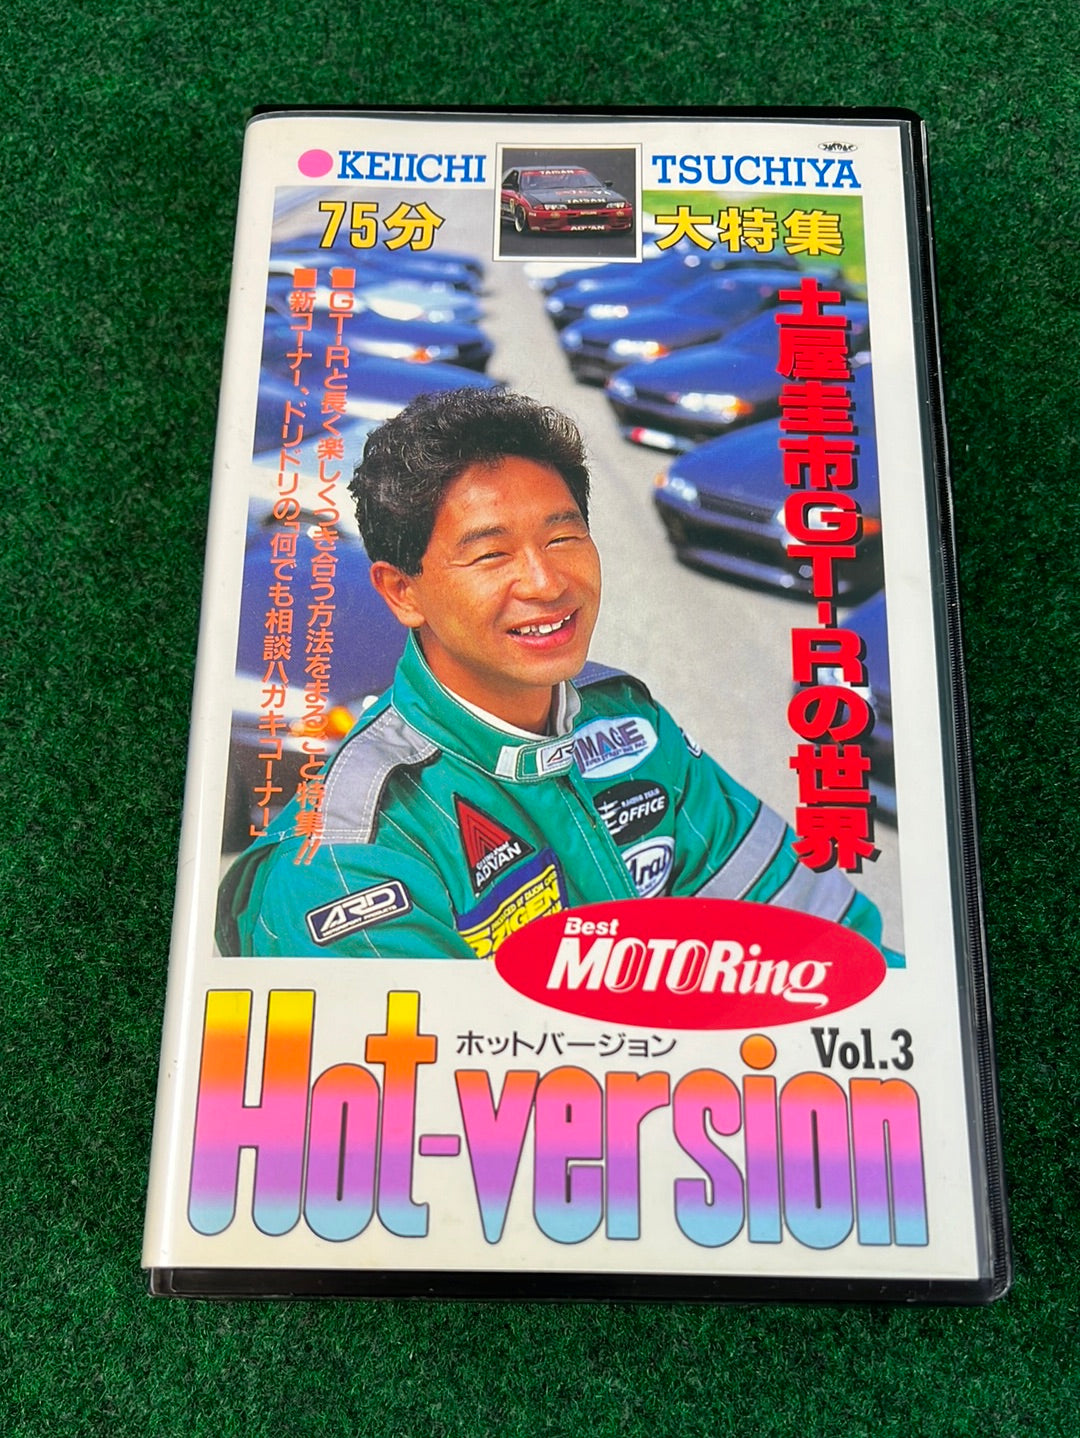 Hot Version VHS - Vol. 3